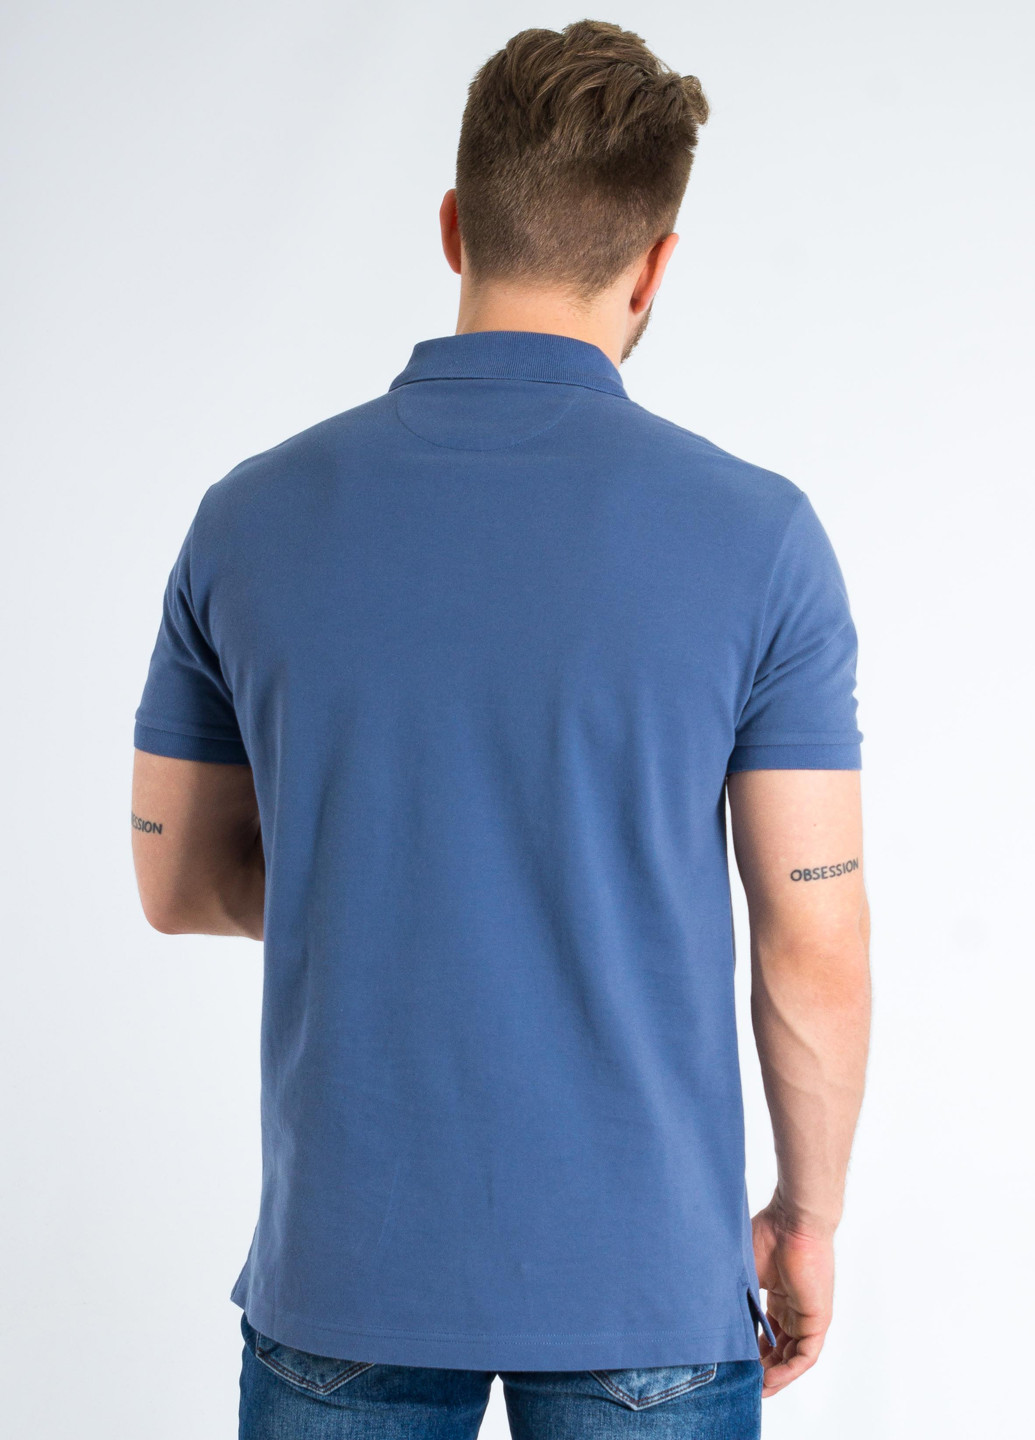 Синяя футболка-поло для мужчин Hackett с логотипом